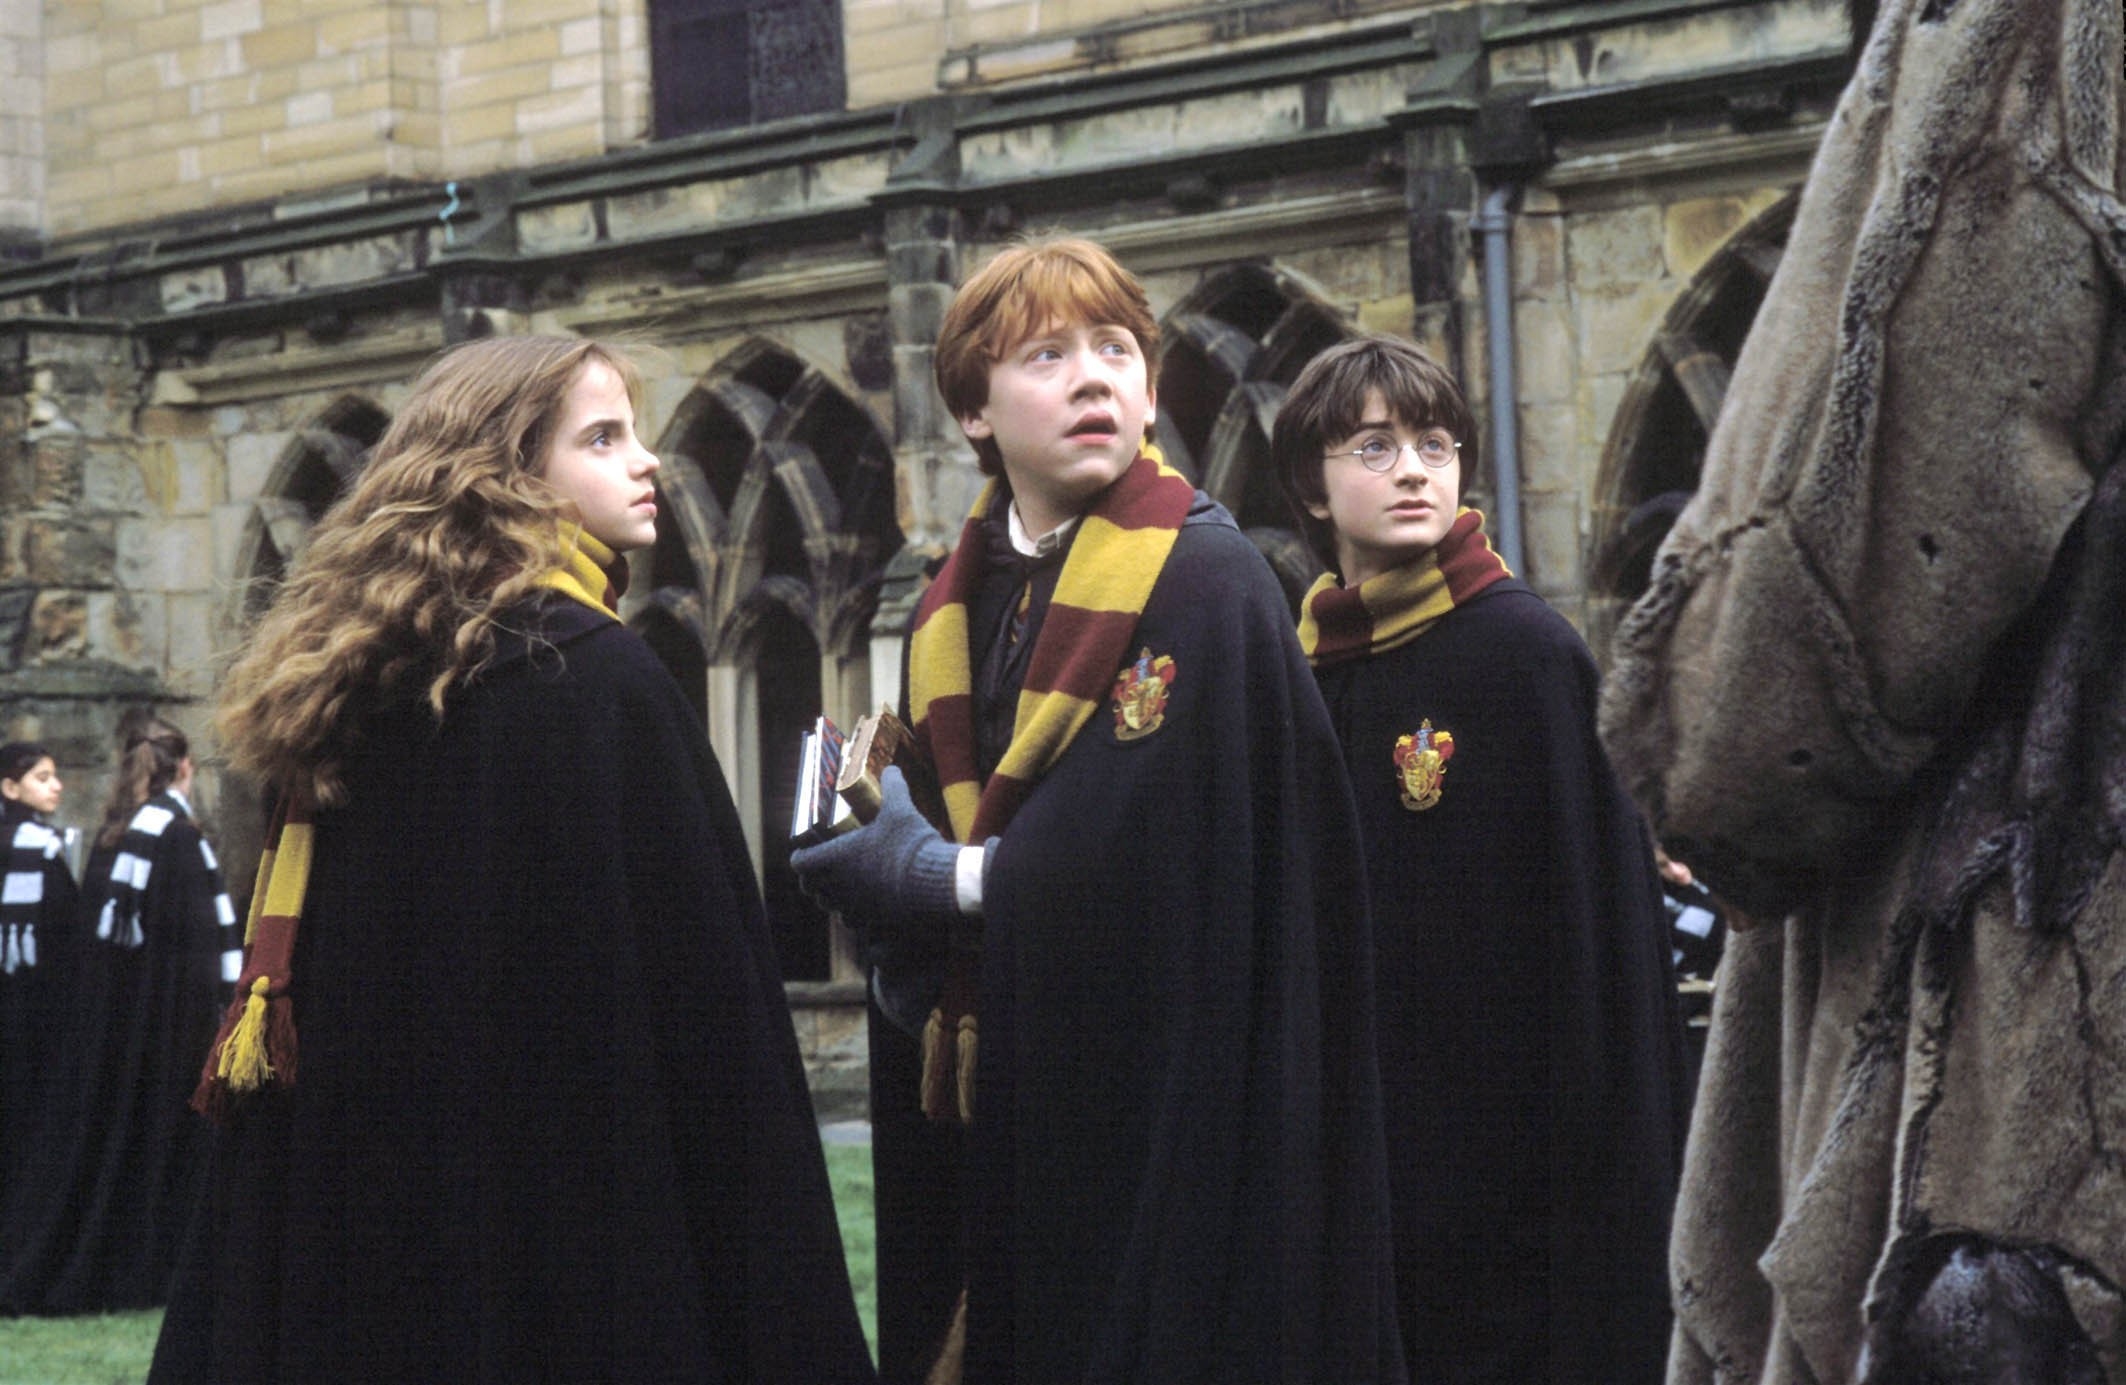 Image du film Harry Potter et la Chambre des secrets 36a027ca-c019-484f-aa9d-92f4441d23e8